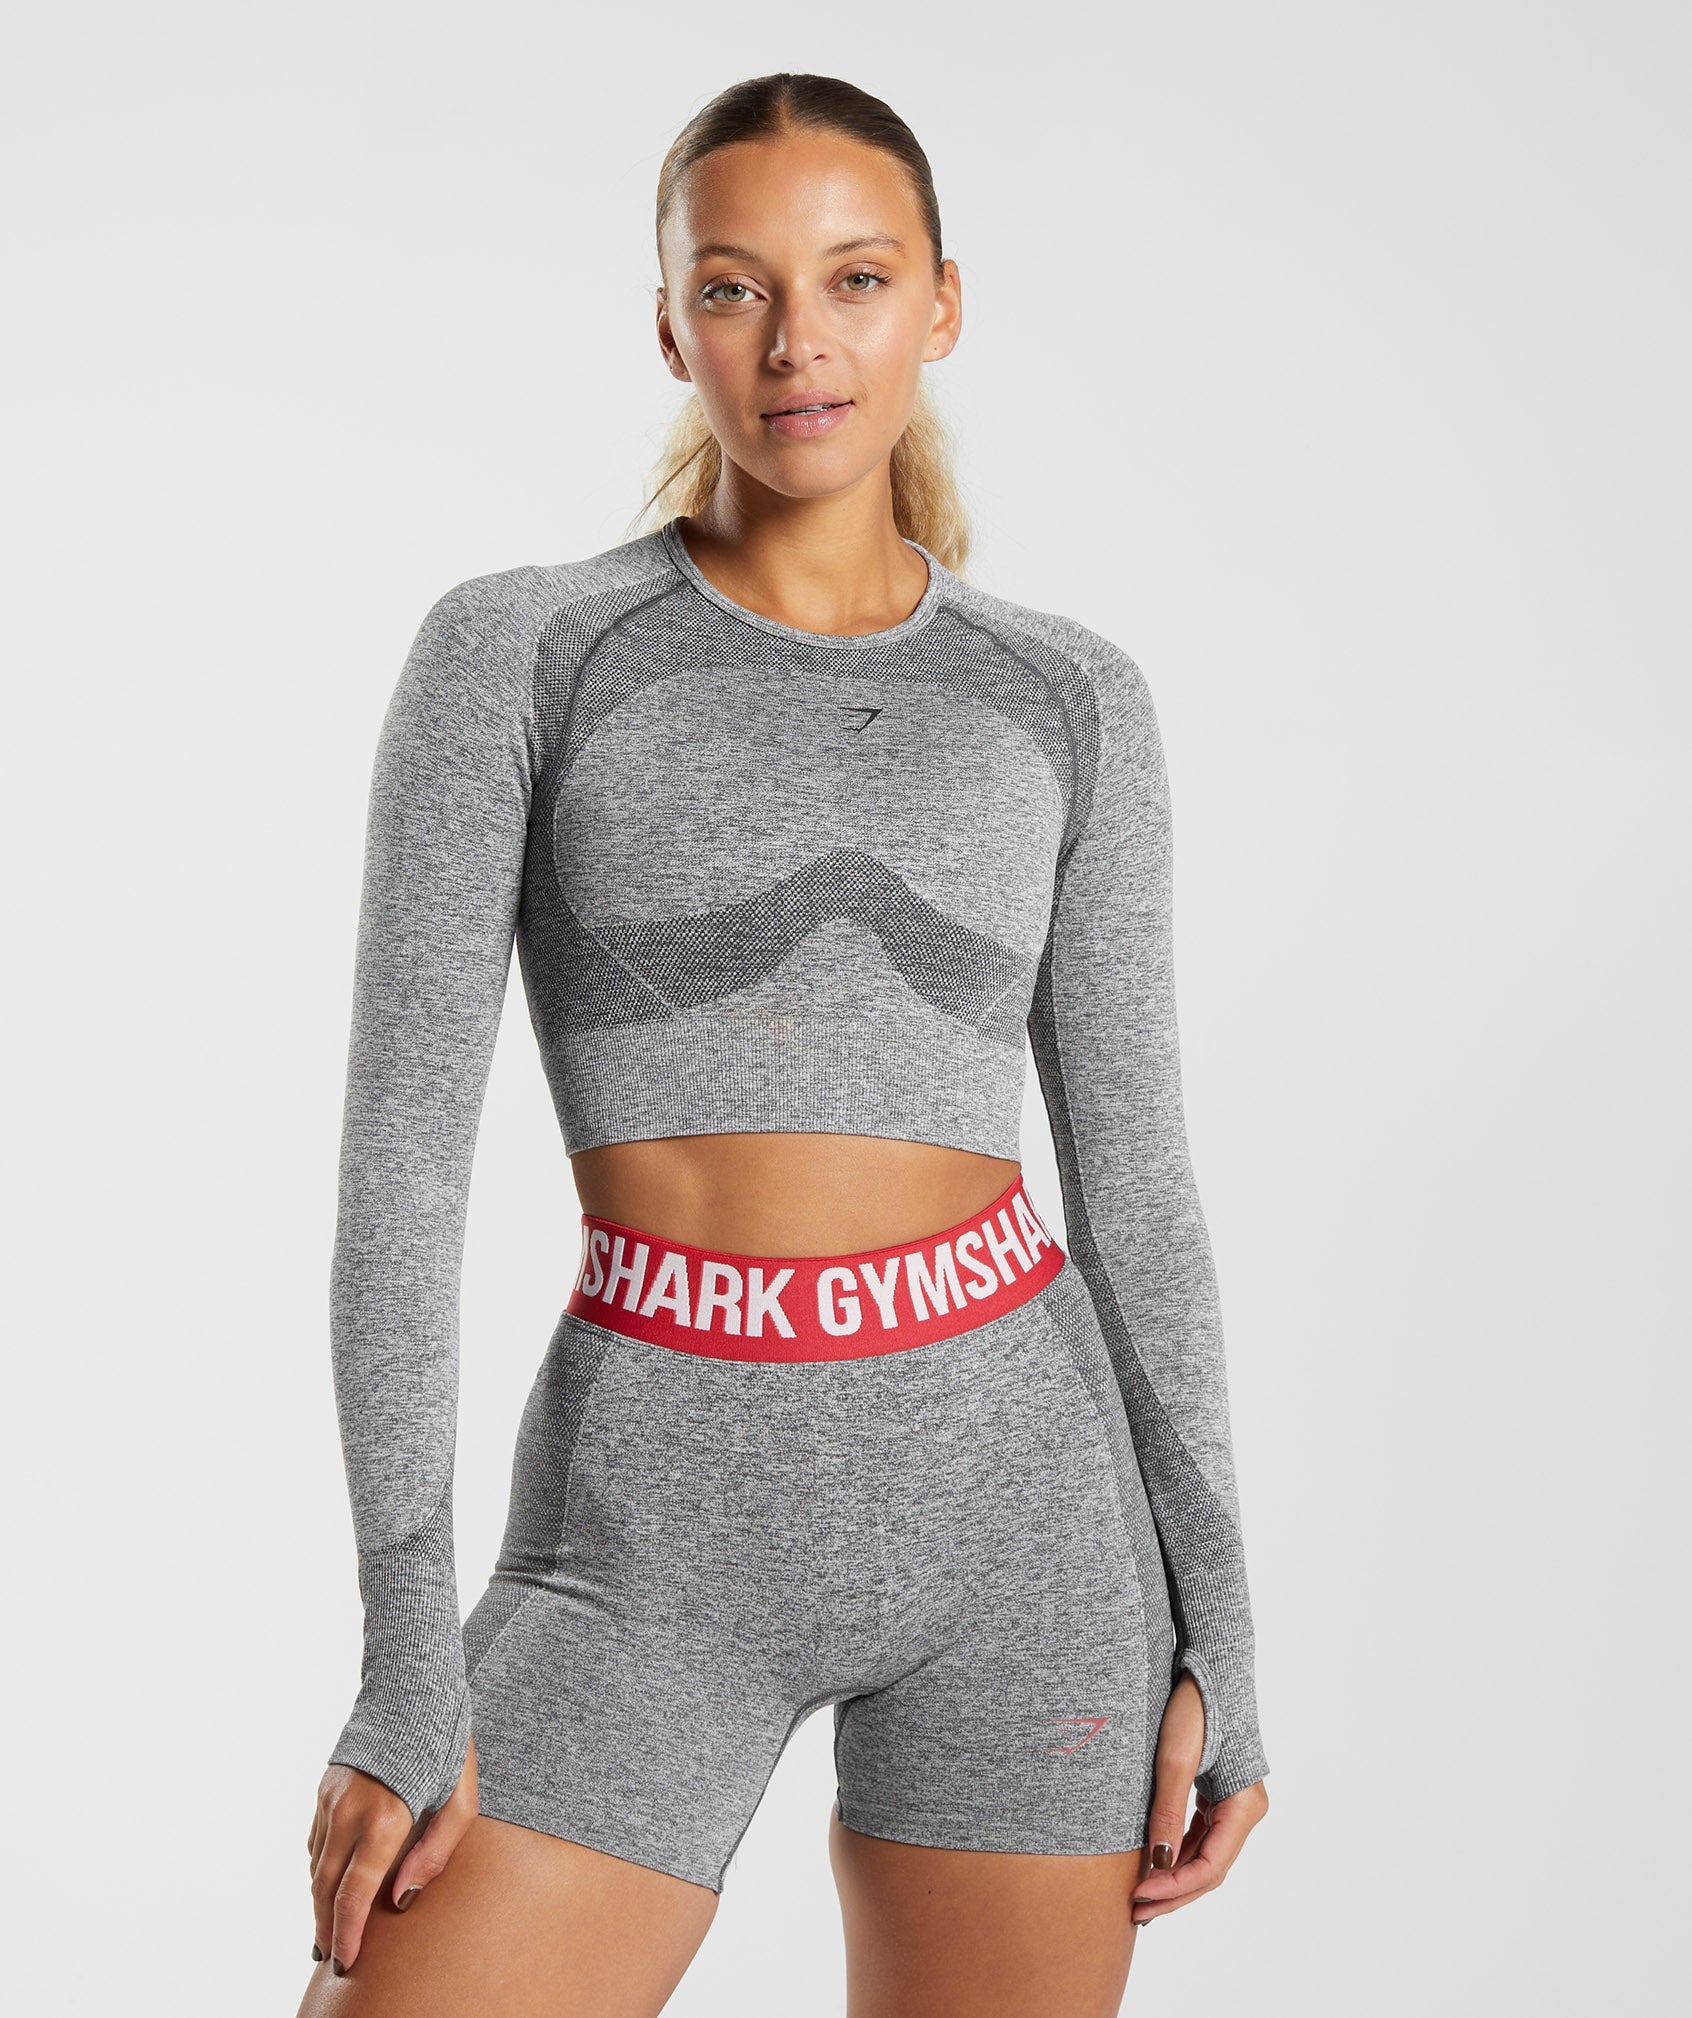 Gymshark Camo Crop Top Gray Size M - $27 (46% Off Retail